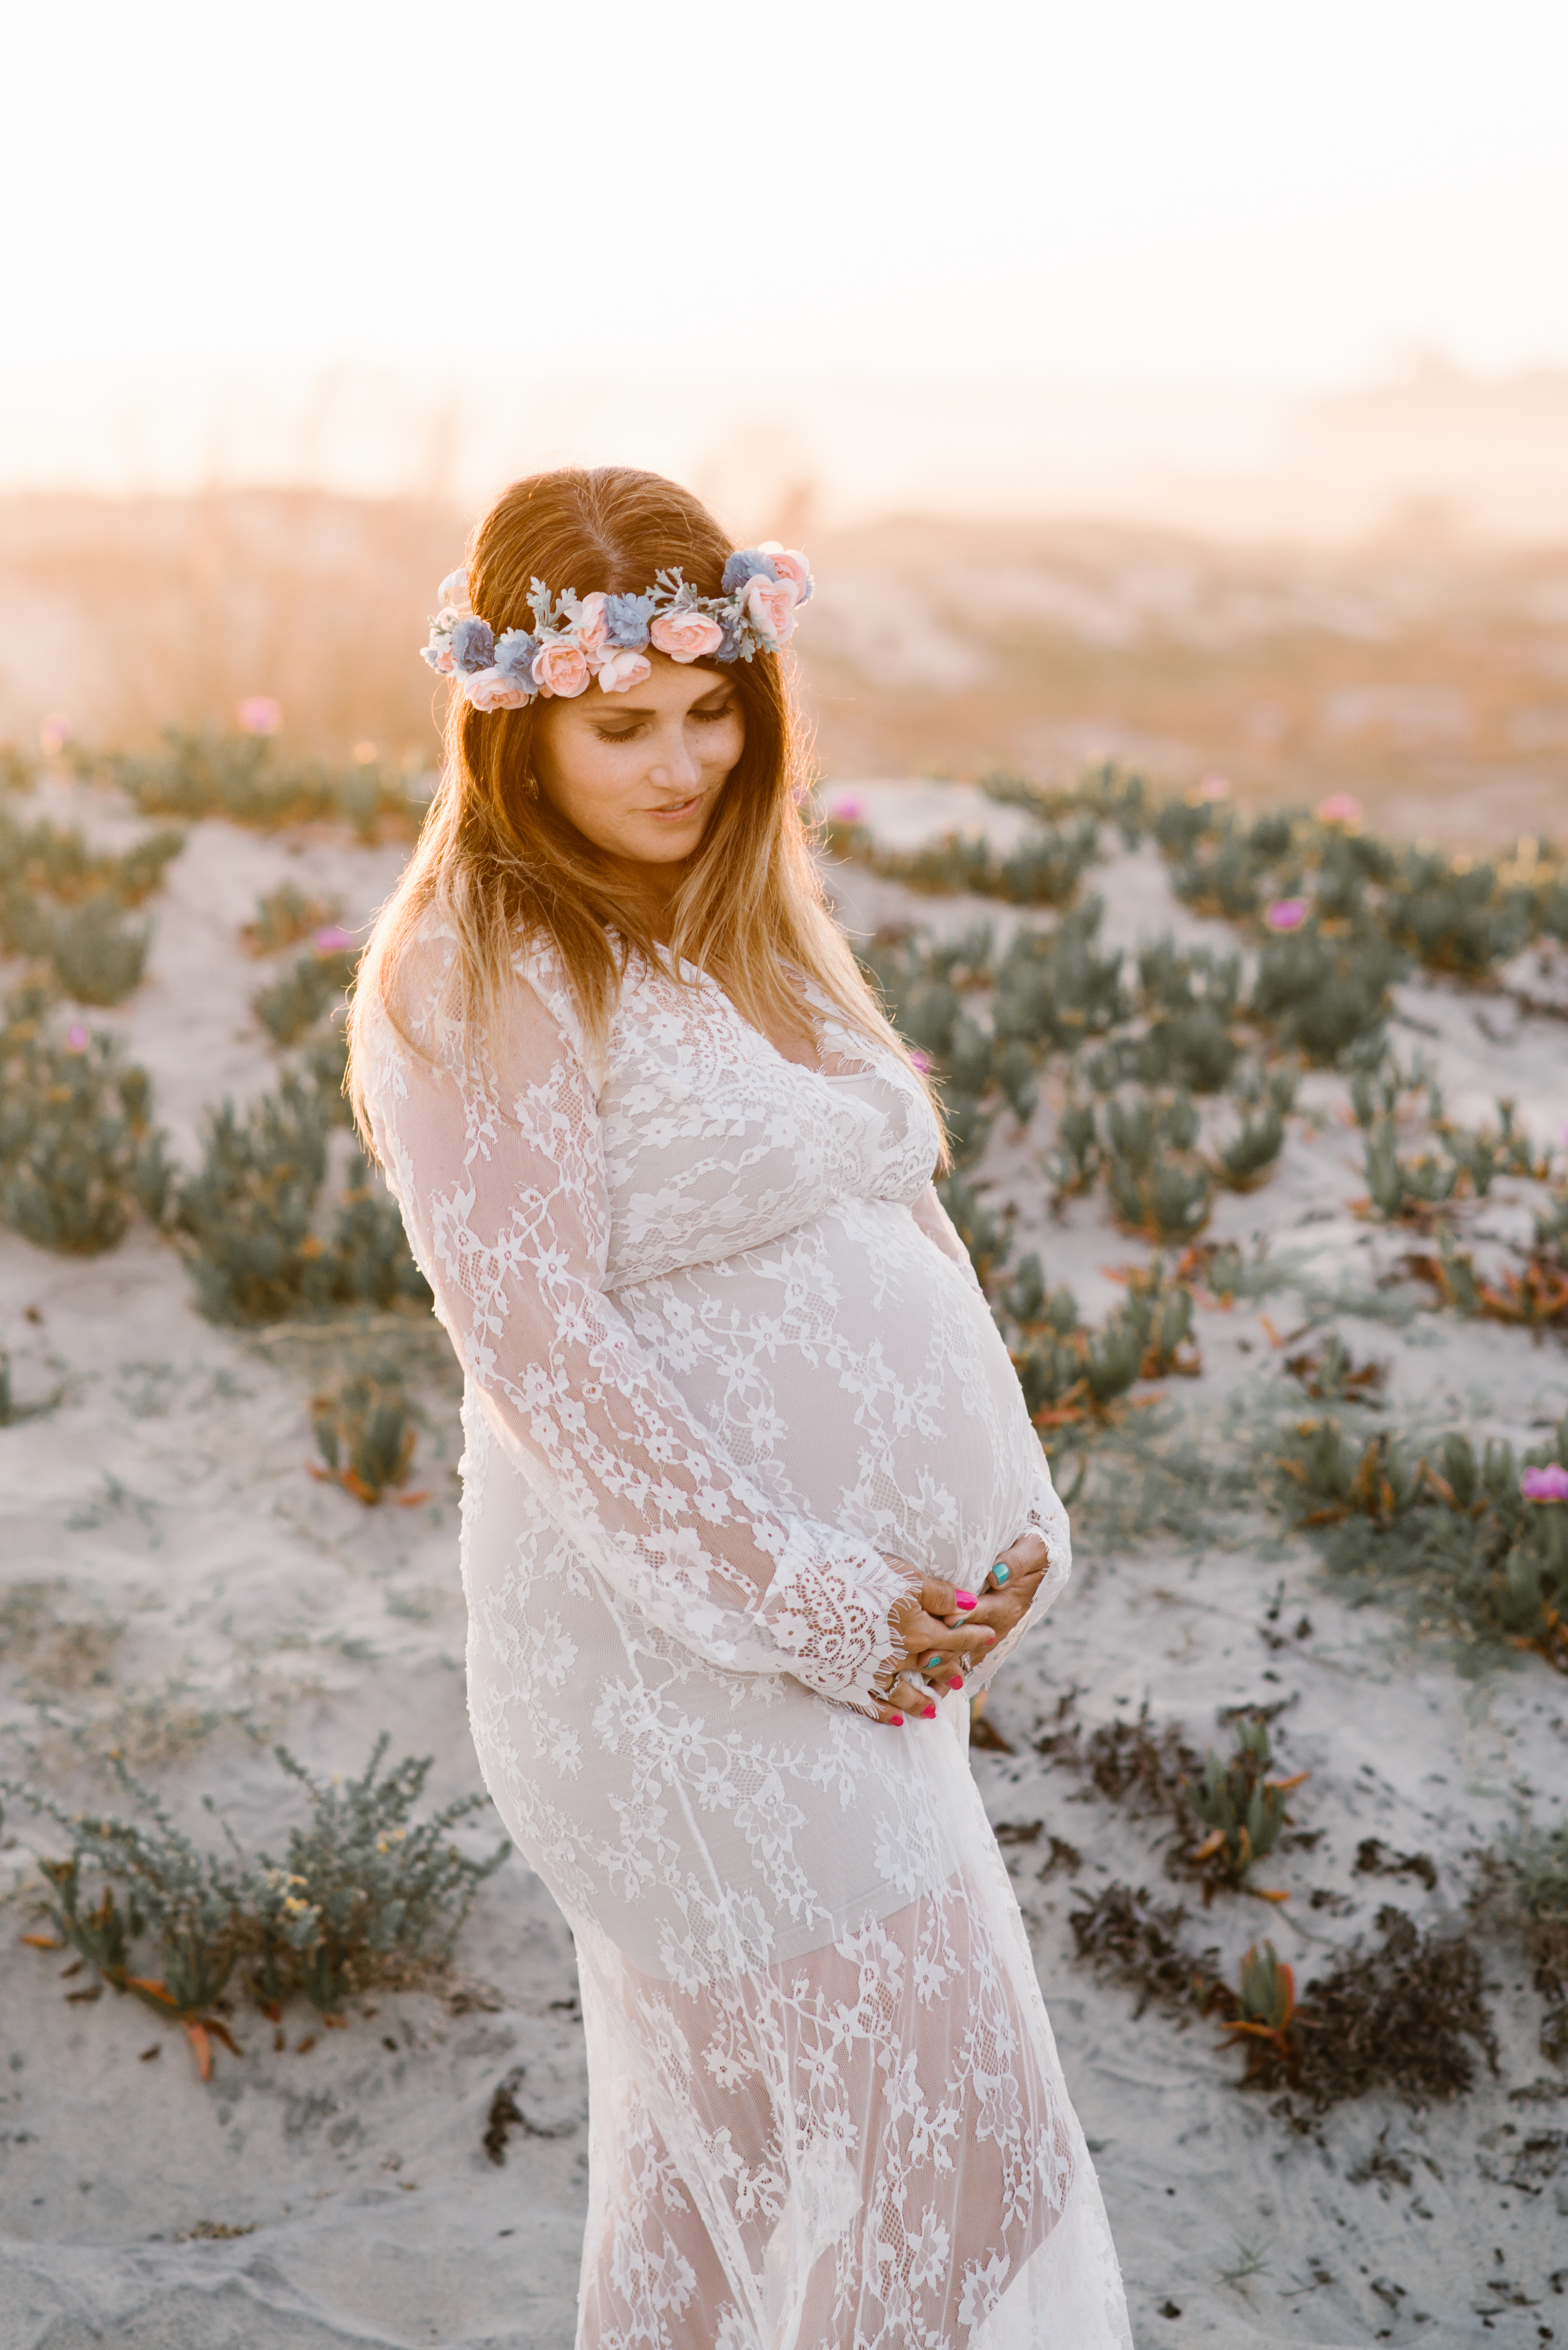 Boho maternityfamily session at Coronado Beach by Kylie Rae Photography